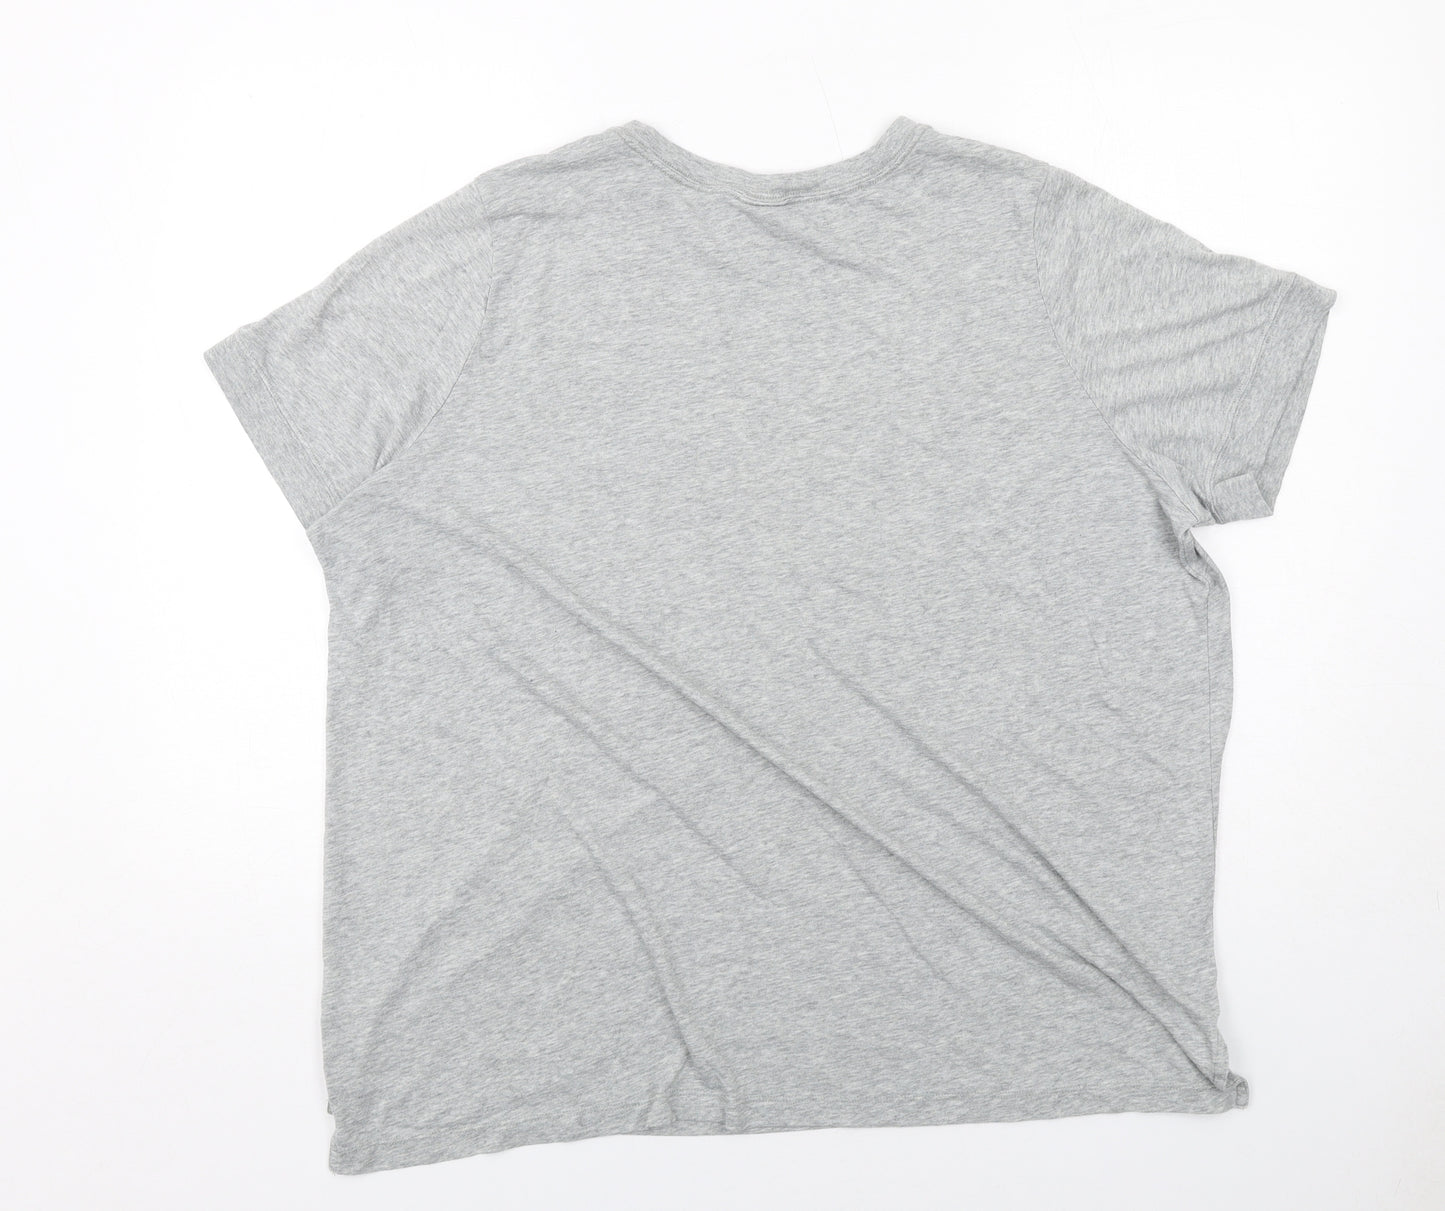 Nike Mens Grey Cotton T-Shirt Size 2XL Round Neck